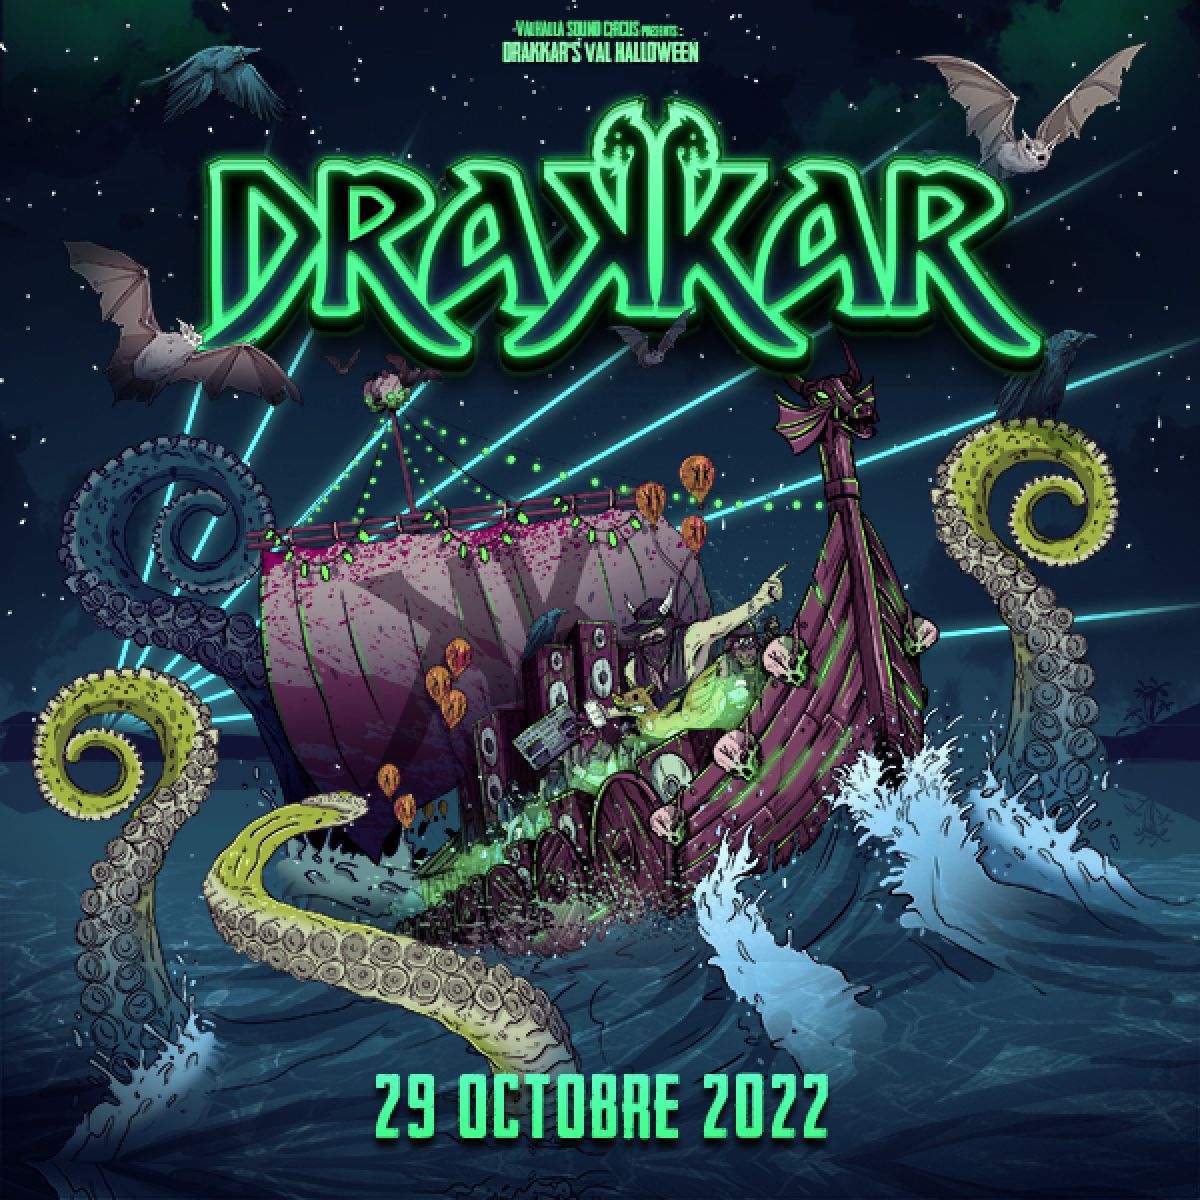 Valhalla Sound Circus Presents : DRAKKAR's Val Halloween